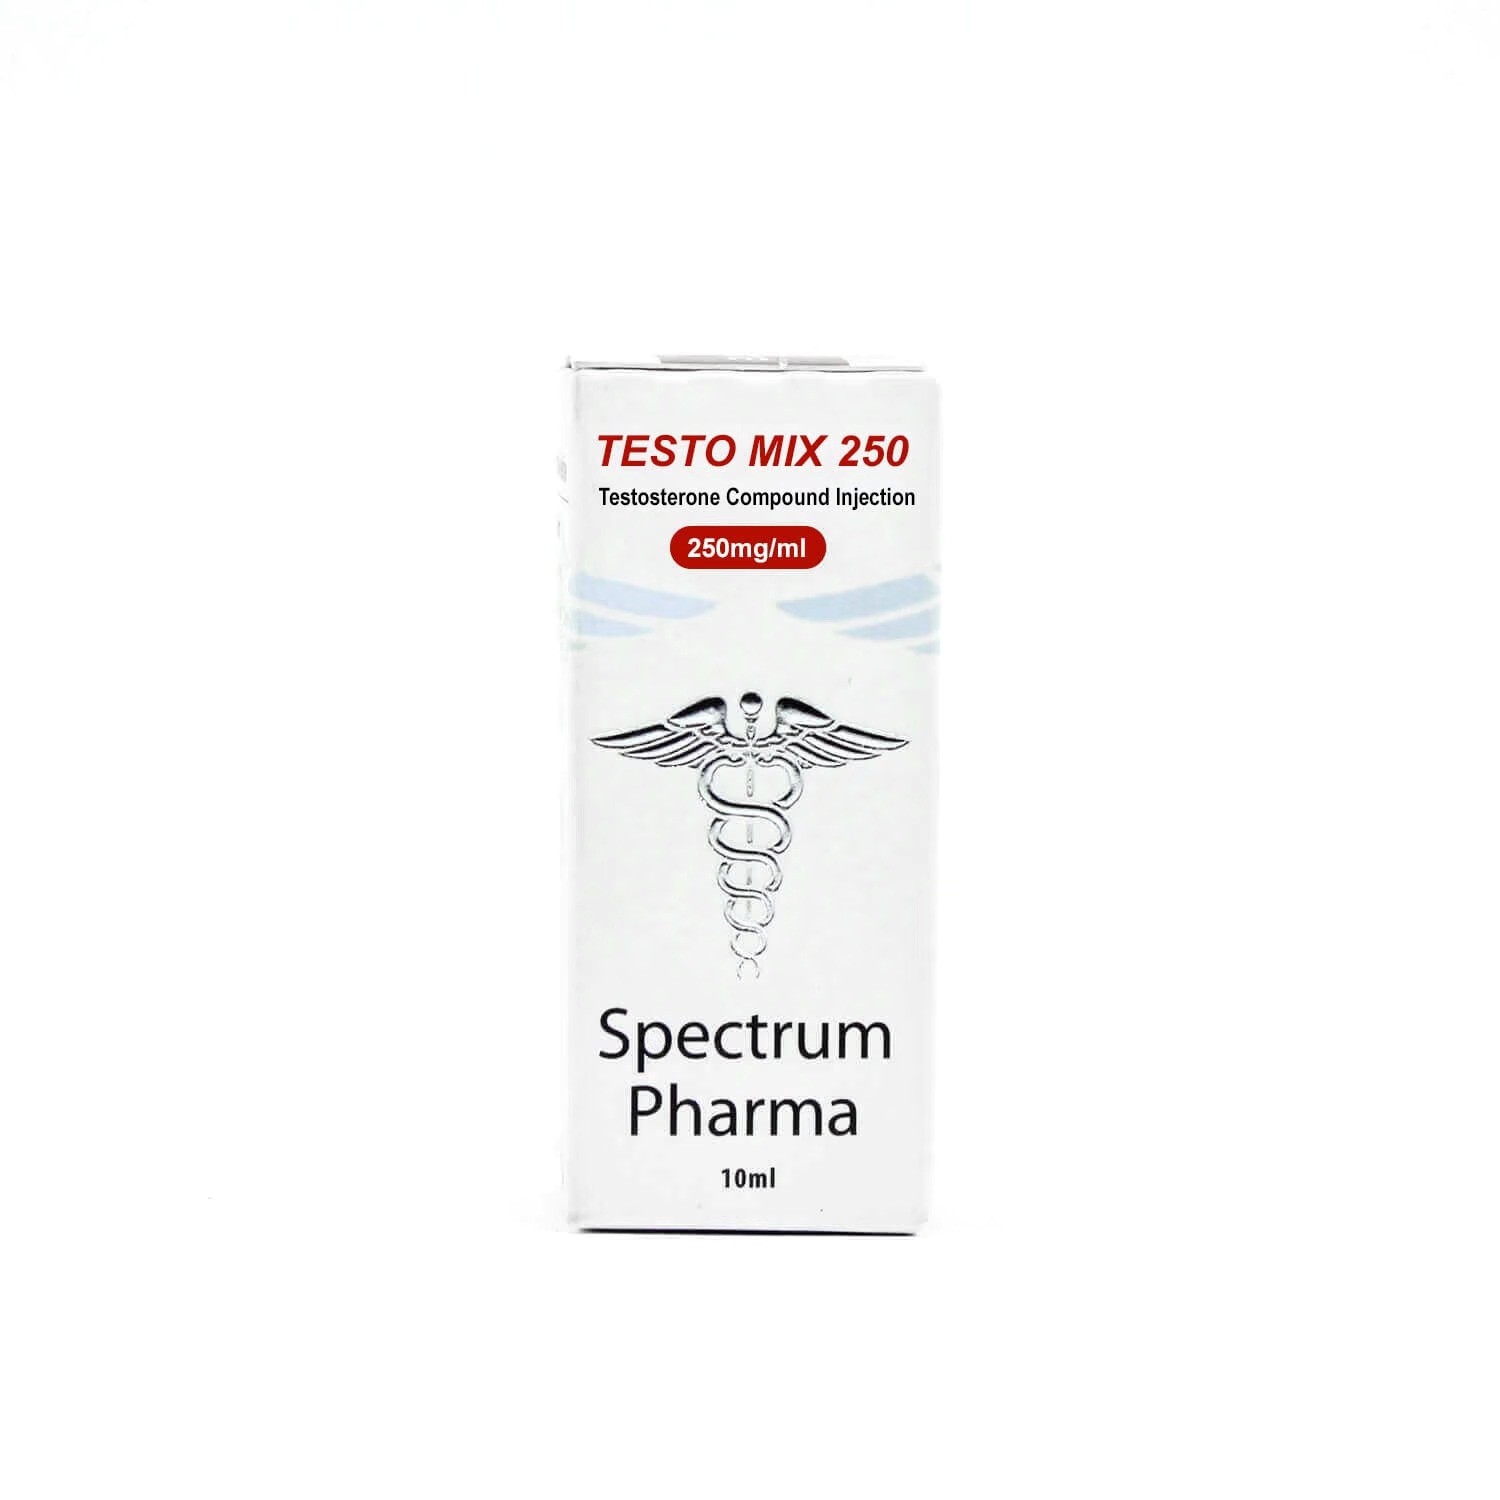 TESTO MIX 250 Spectrum Pharma